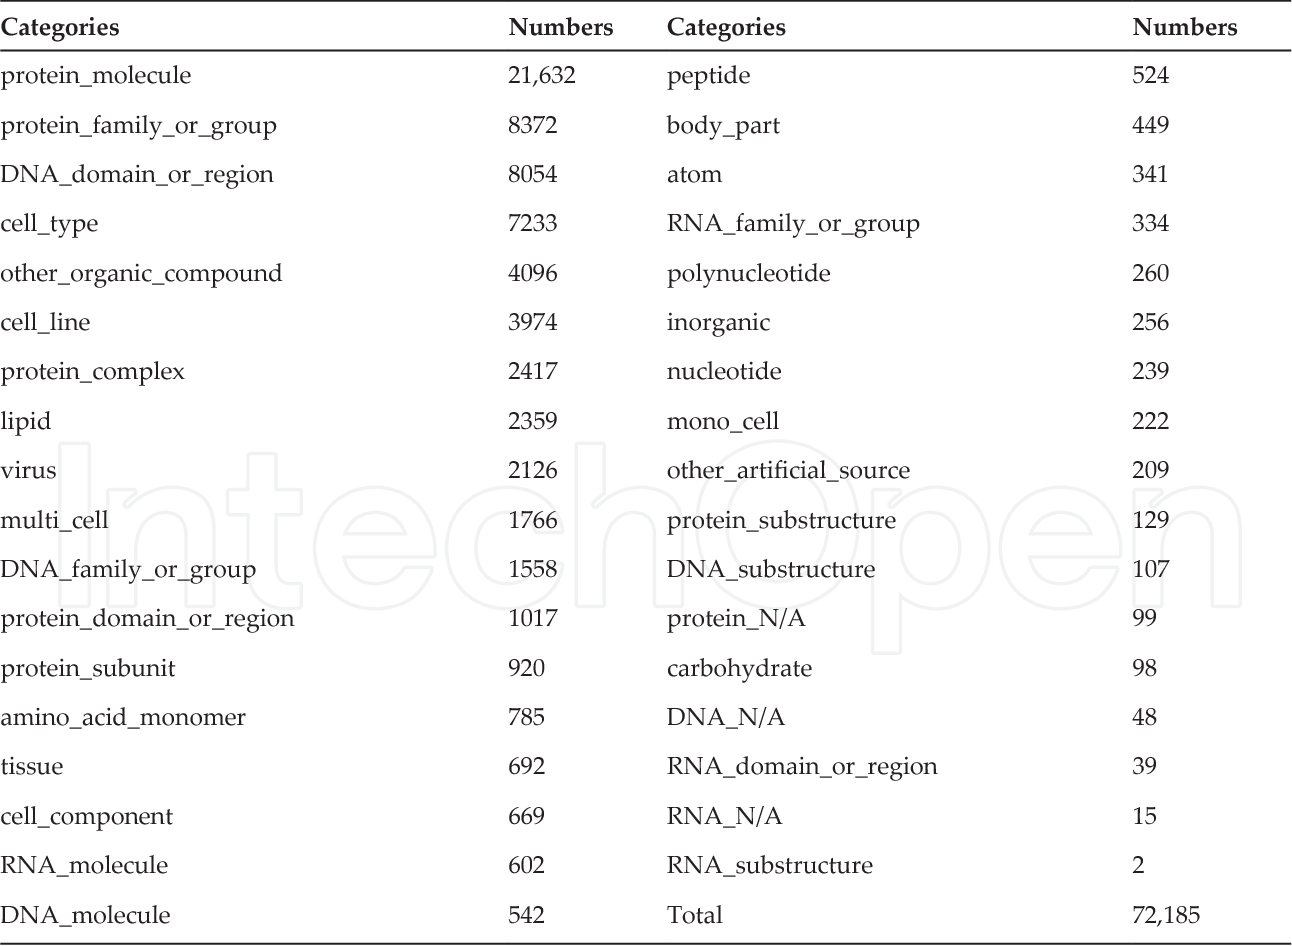 categories in Genia database